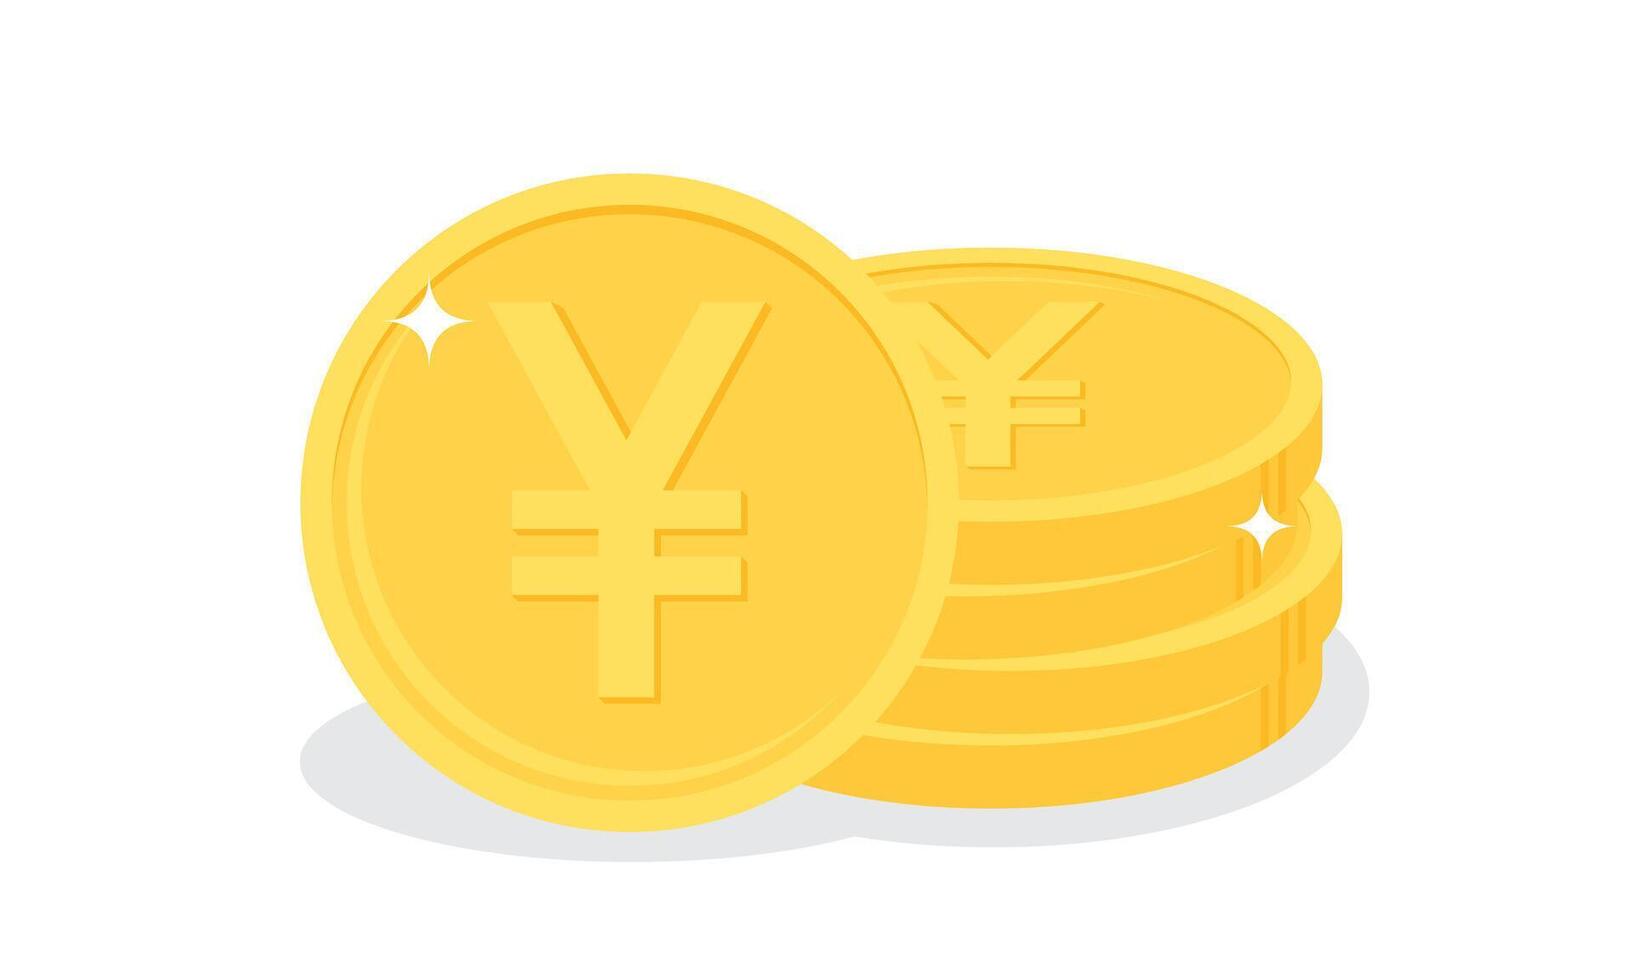 apilar de oro japonés yen o chino yuan monedas negocio y Finanzas concepto. plano diseño vector ilustración.